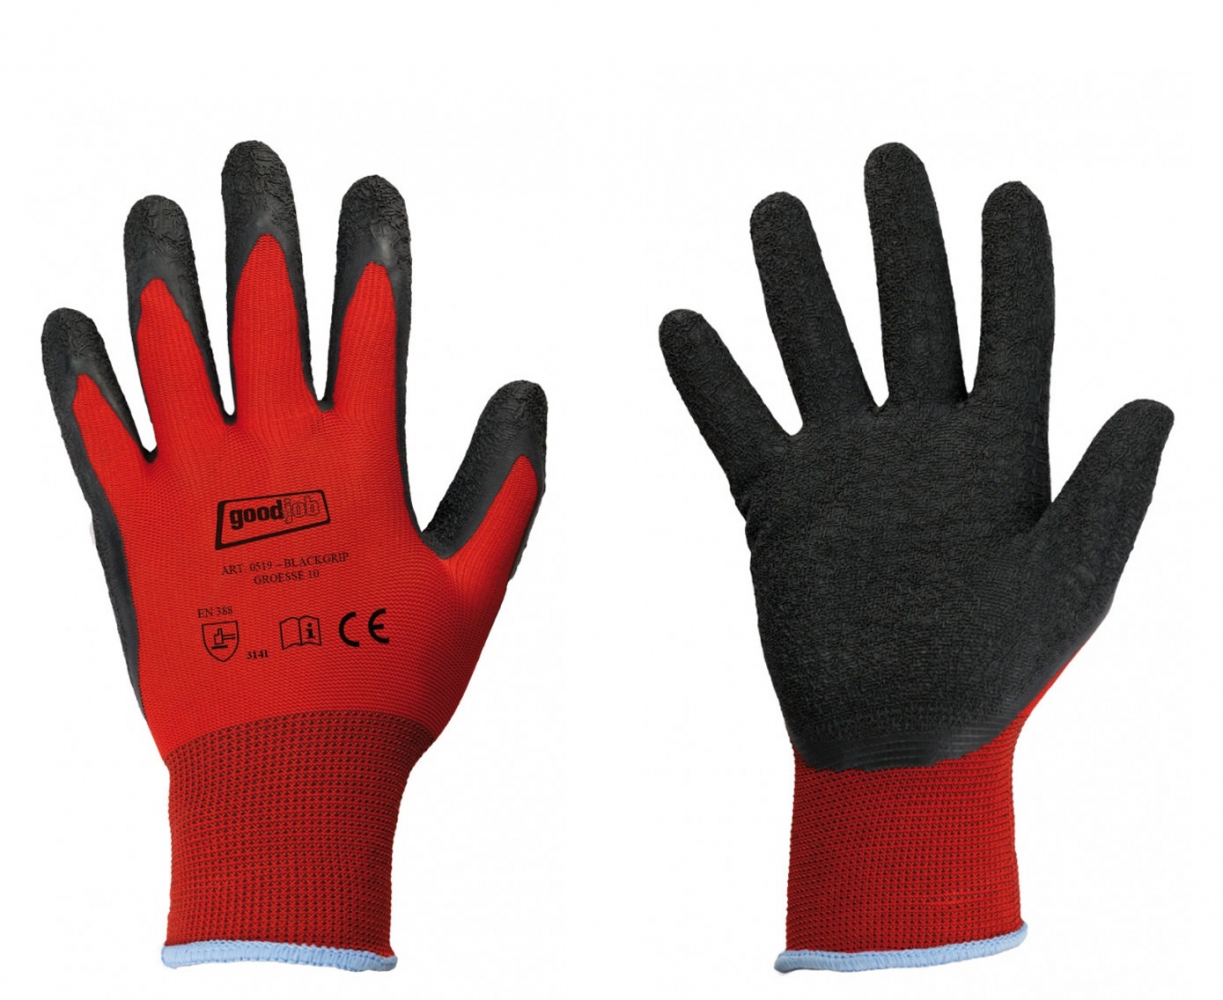 pics/Feldtmann 2016/Handschutz/google/good-job-0519-black-grip-knit-safety-gloves-with-latex-coating2.jpg